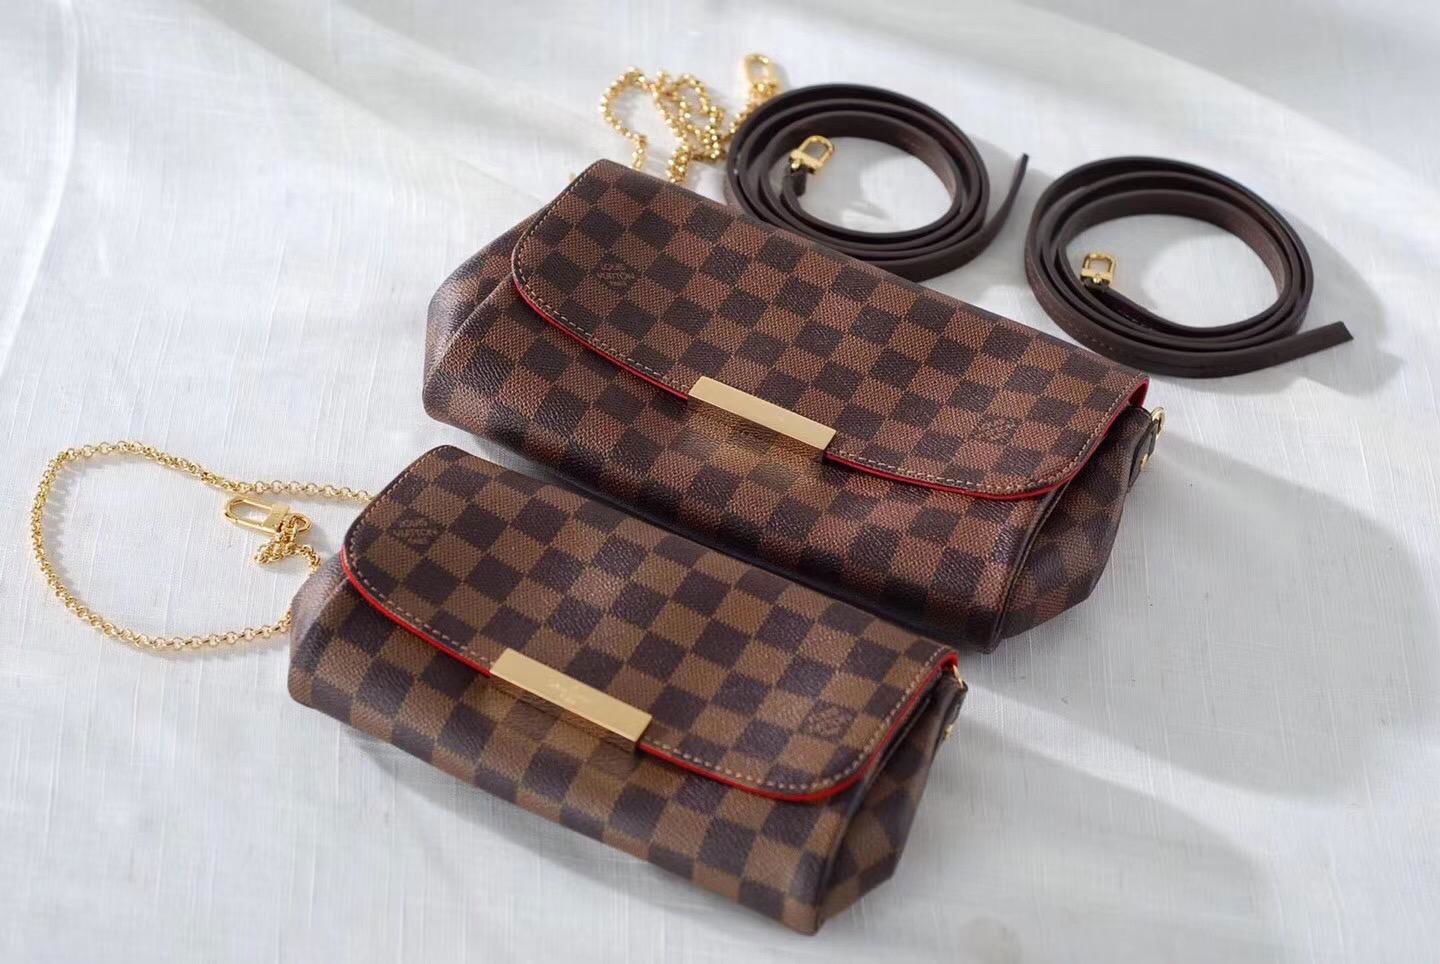 Cheap Louis Vuitton handbags LV NEVERFULL Louis Vuitton ...